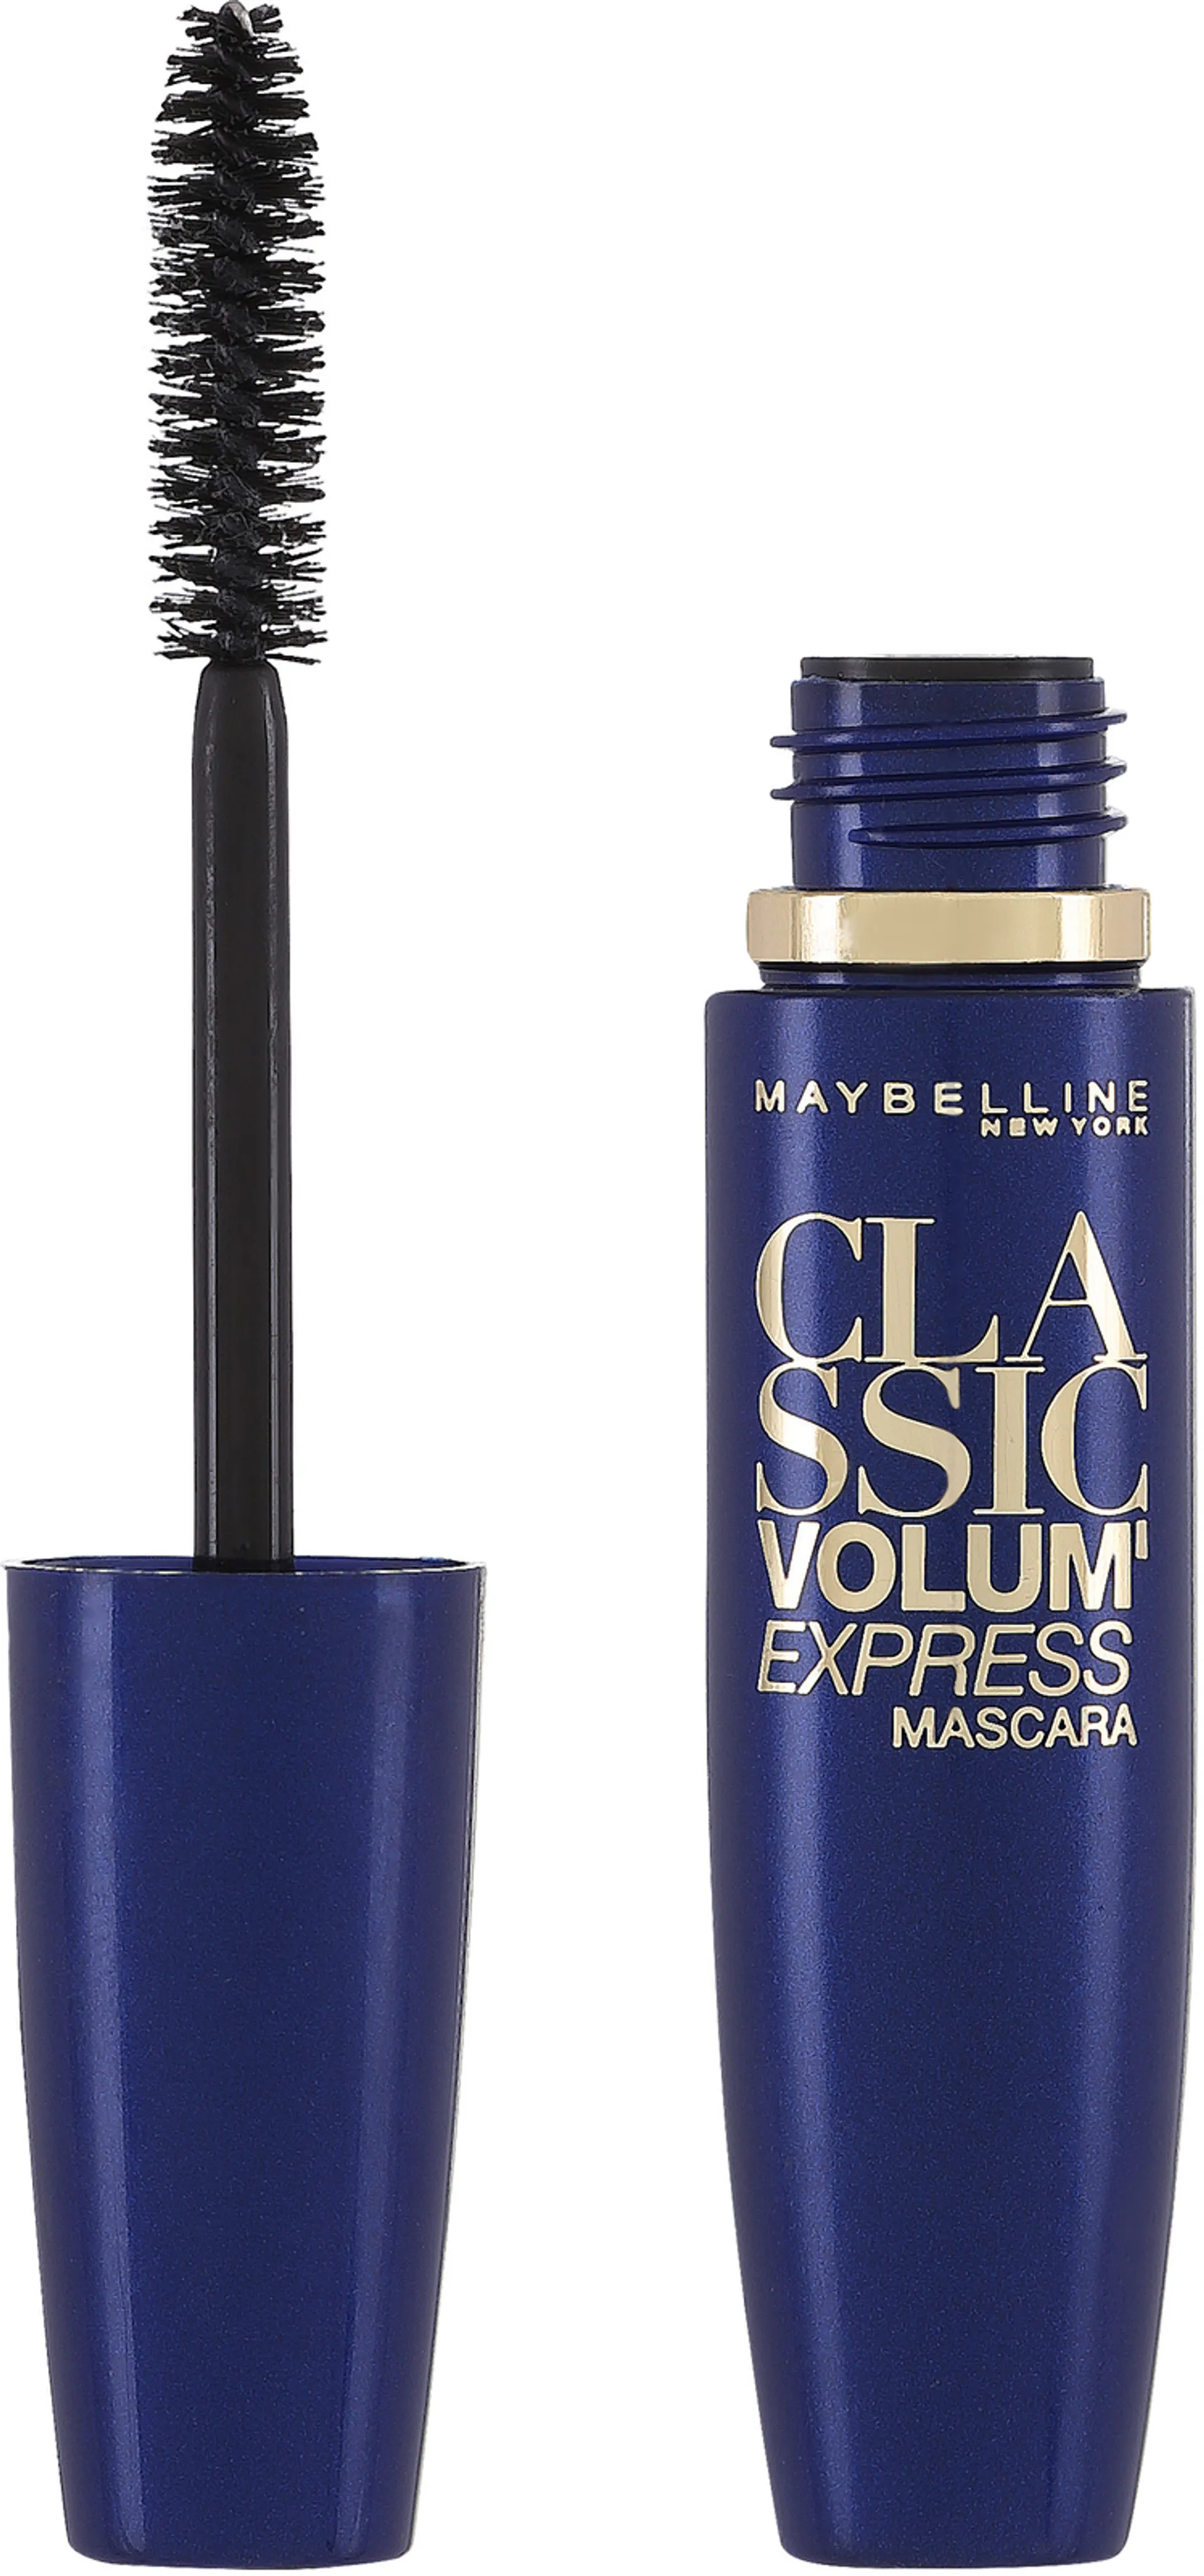 Maybelline New York  Volum Express  Black mascara 10ml - 1